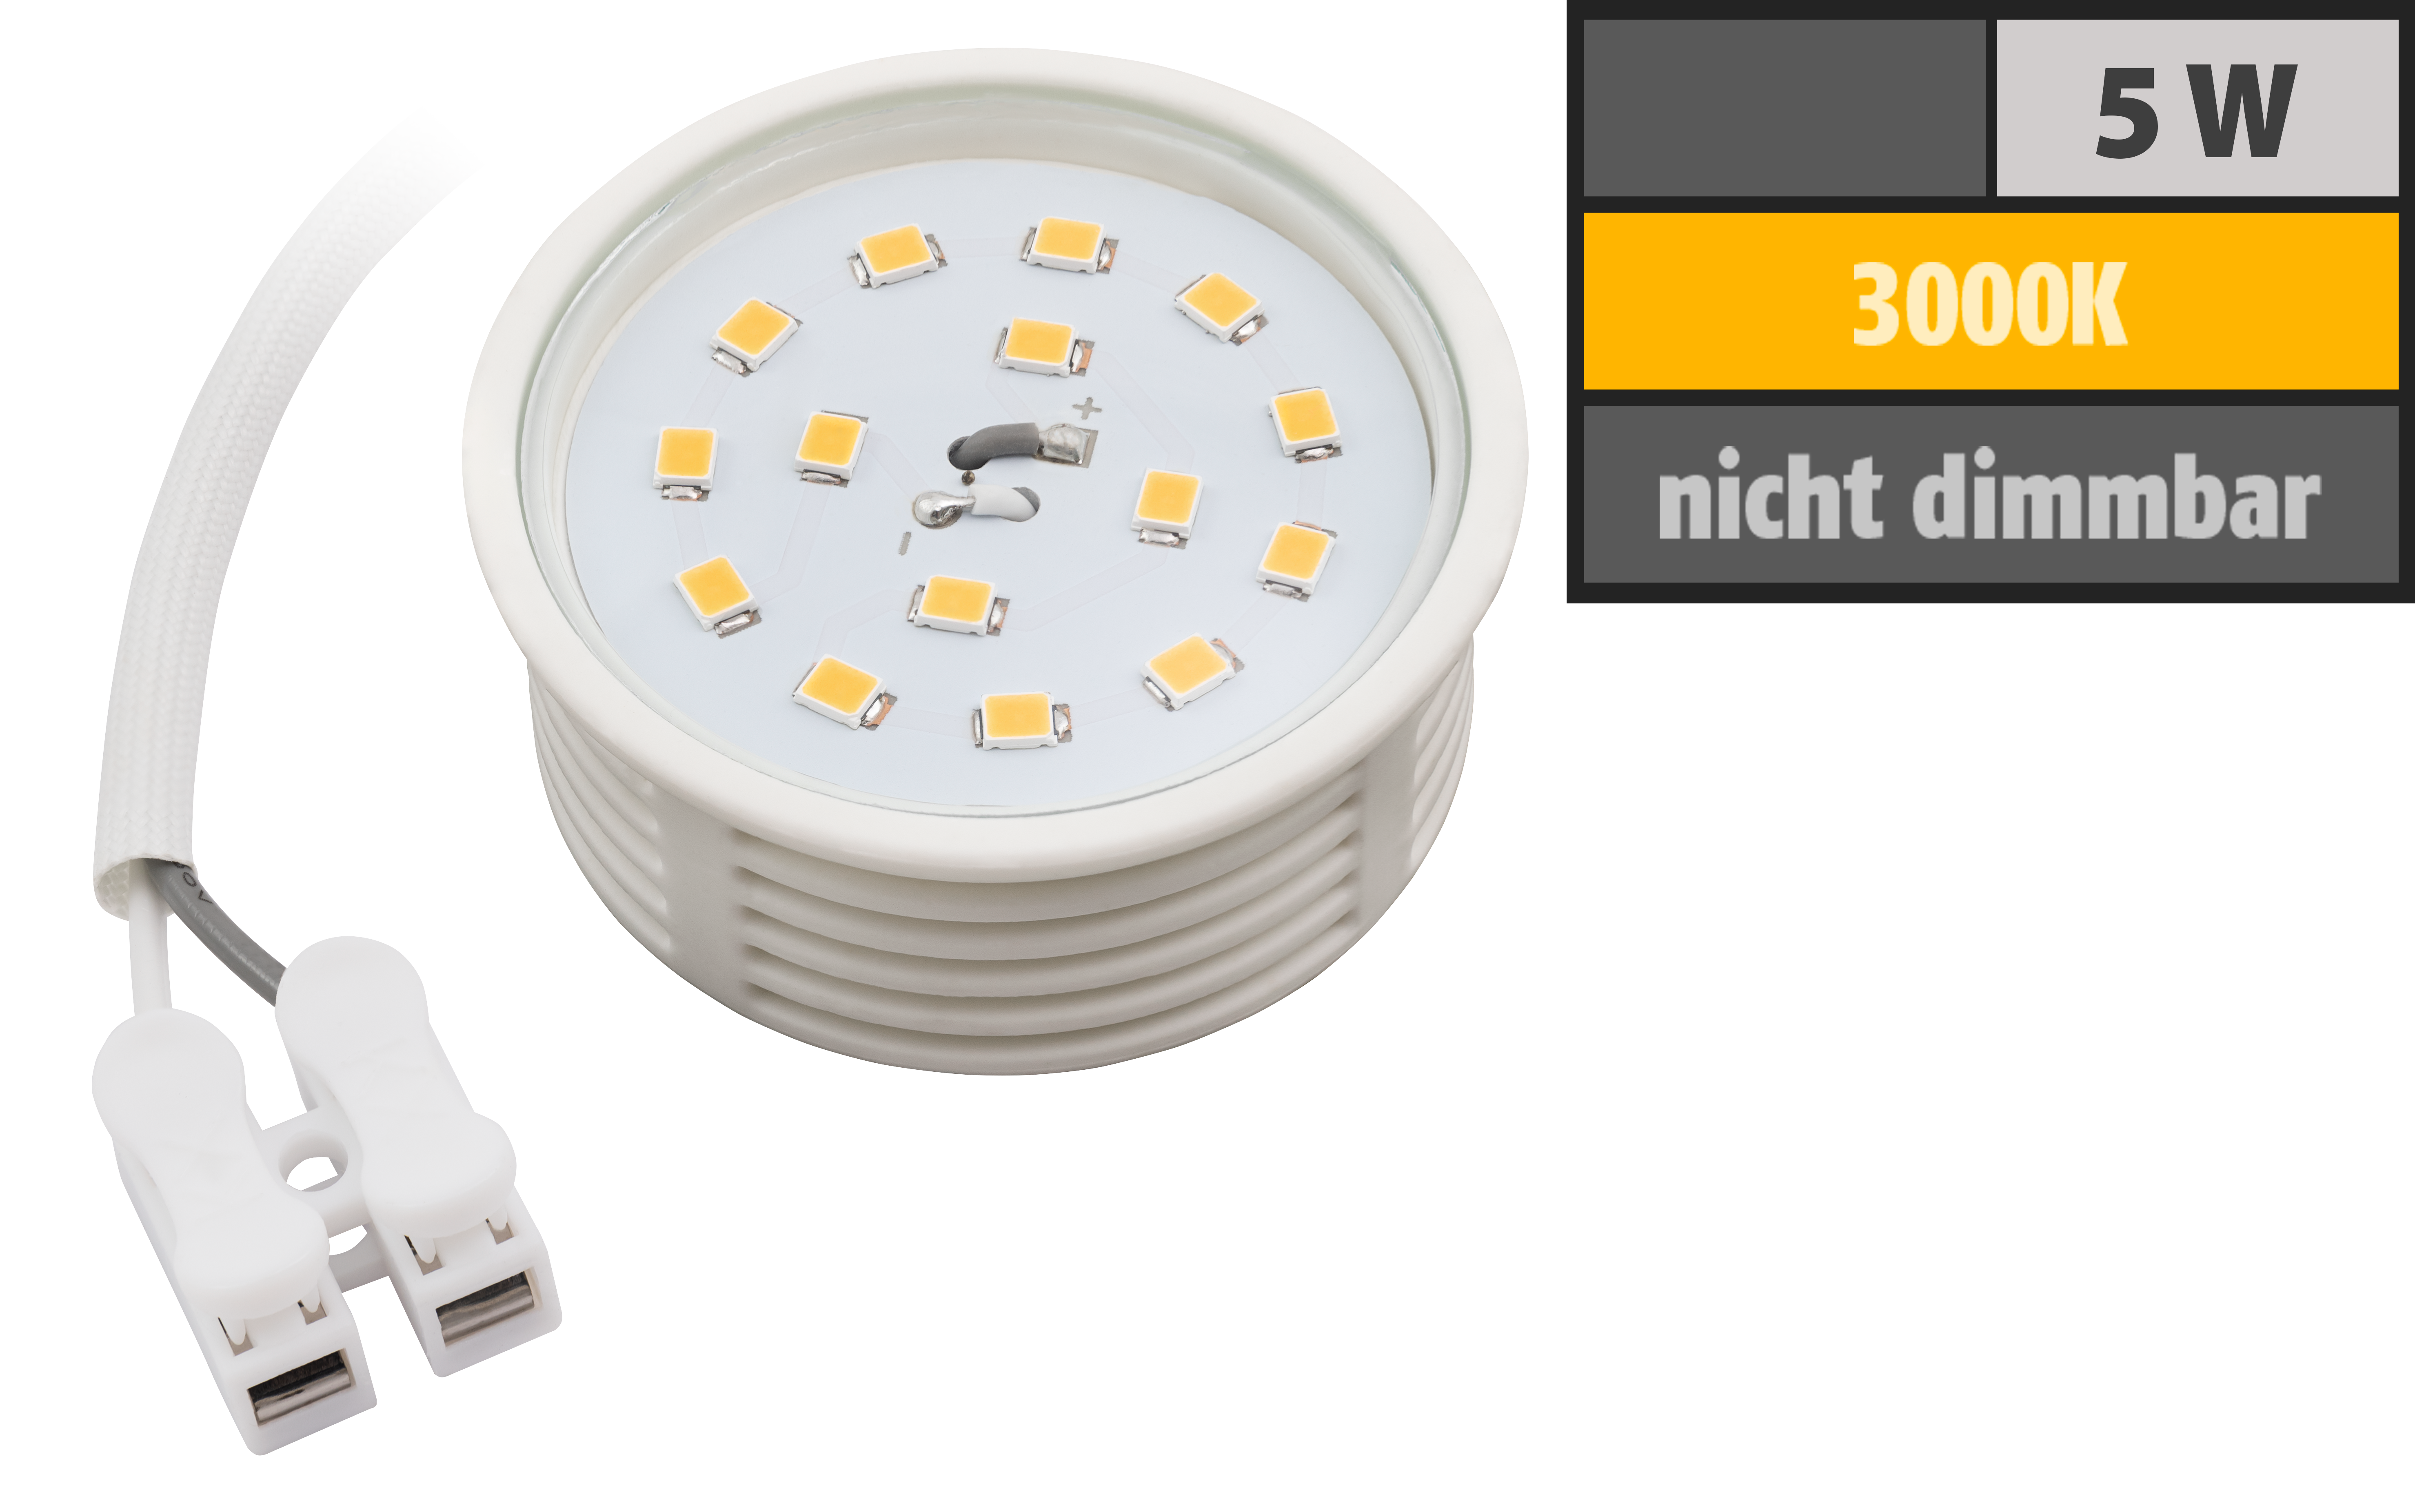 LED-Modul McShine, 5W, 400 Lumen, 230V, 50x23mm, warmweiß, 3000K